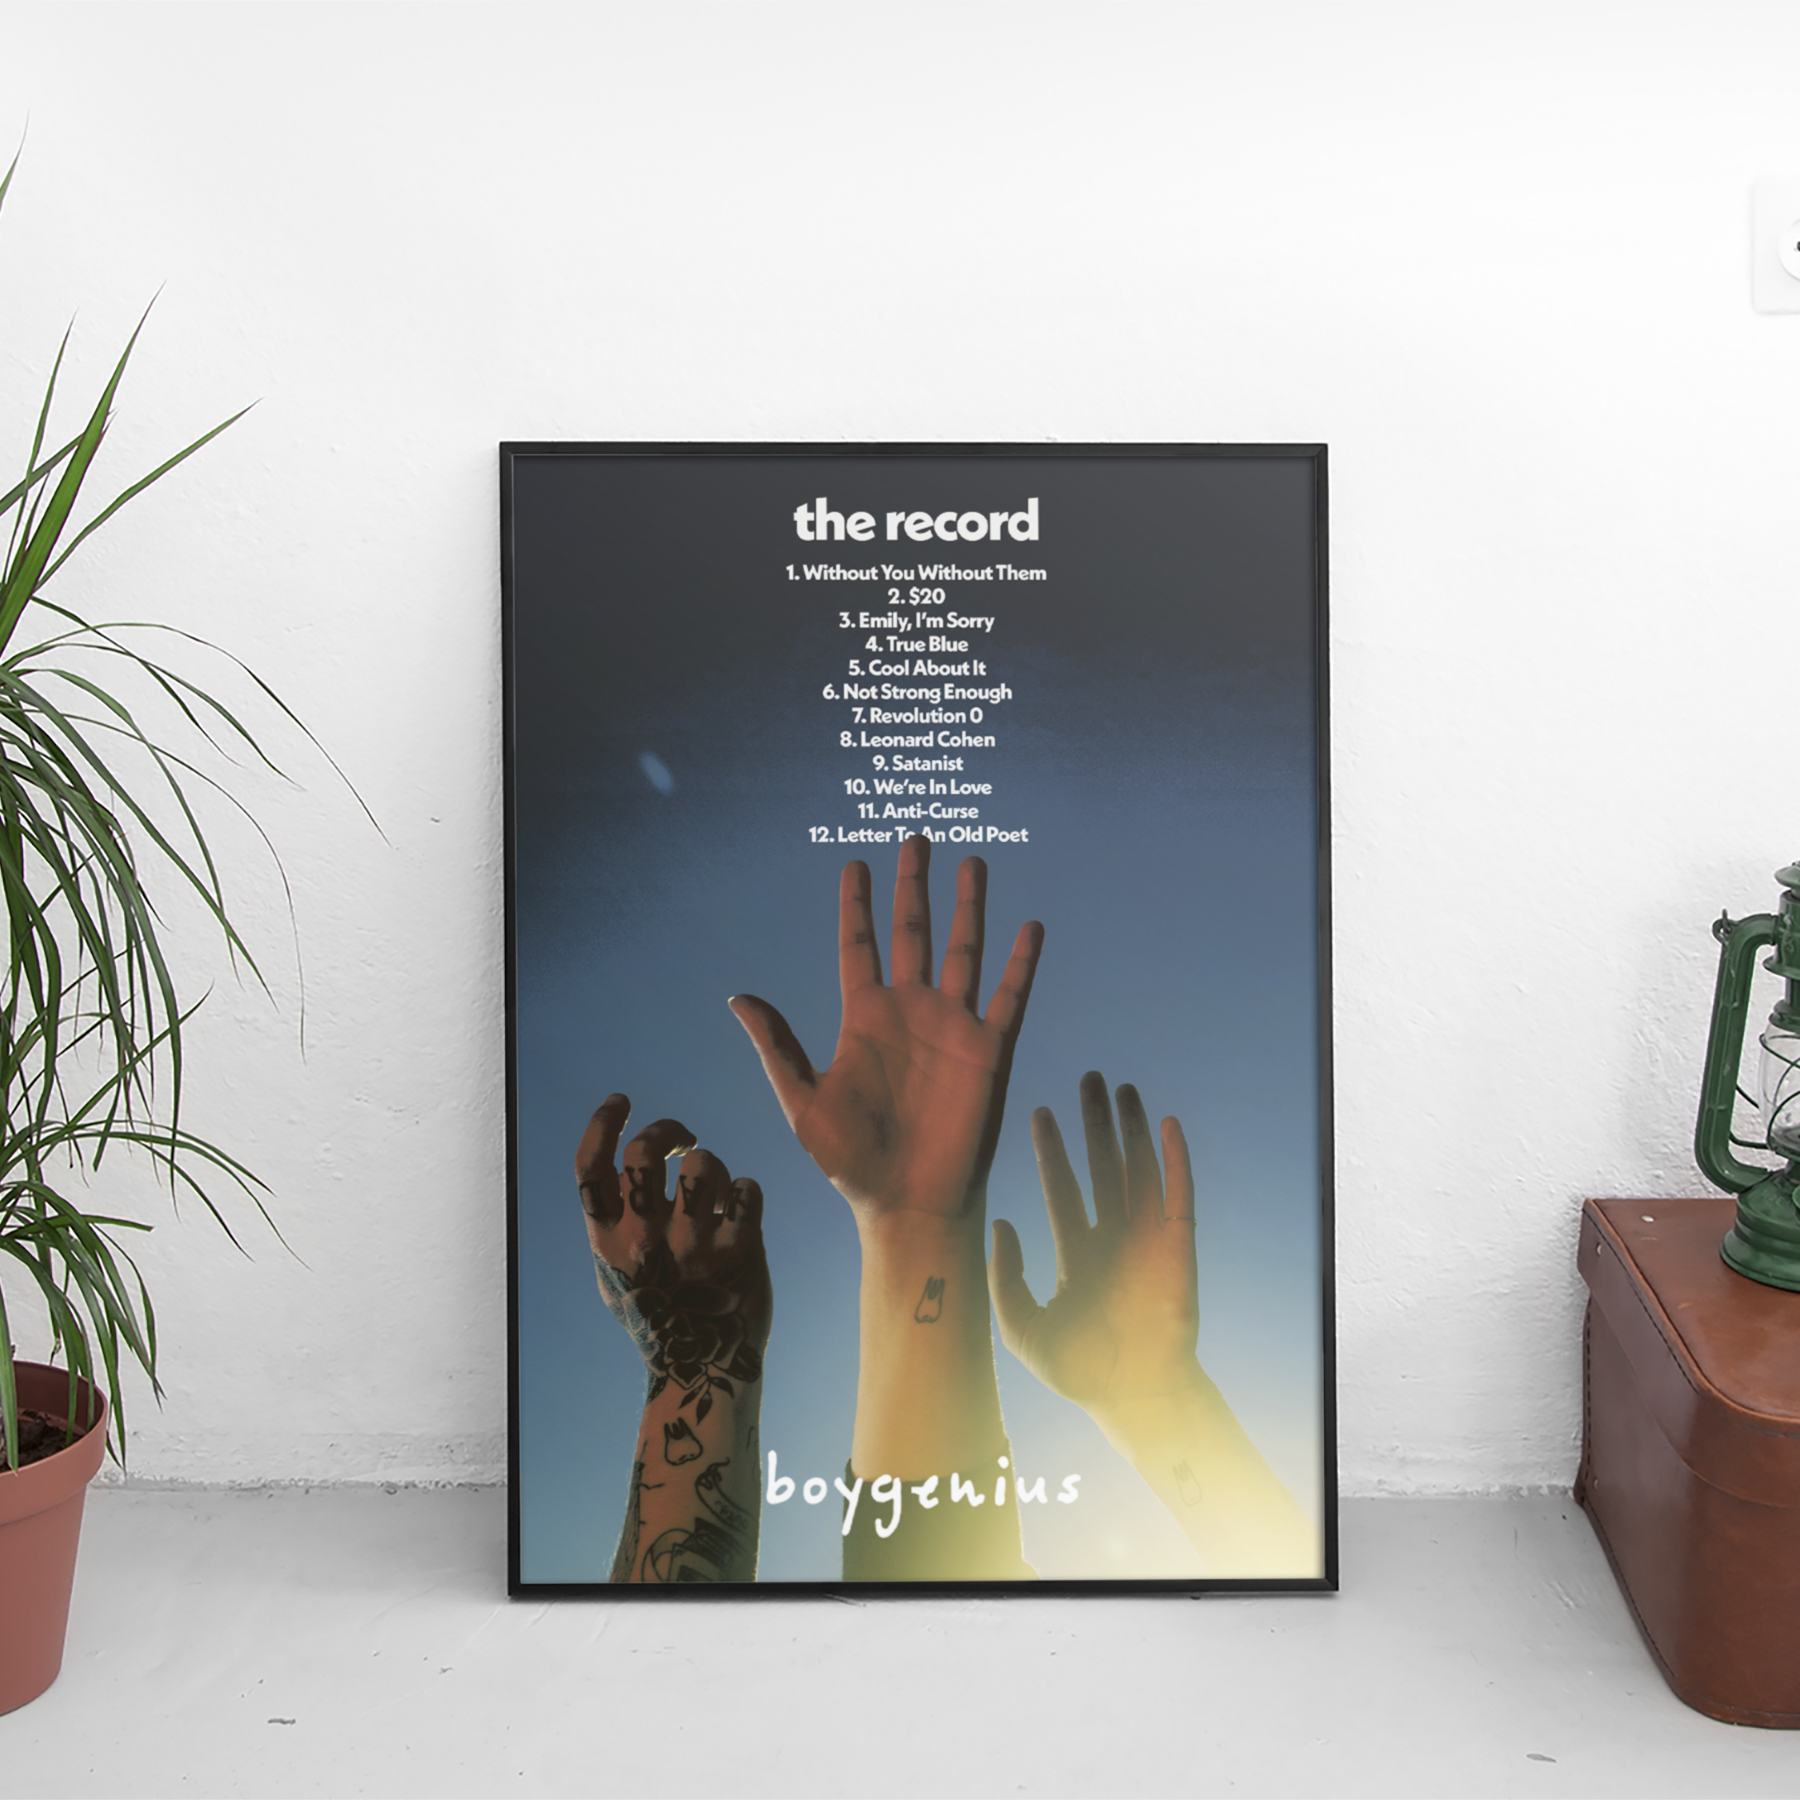 boygenius - the record Tracklist Poster